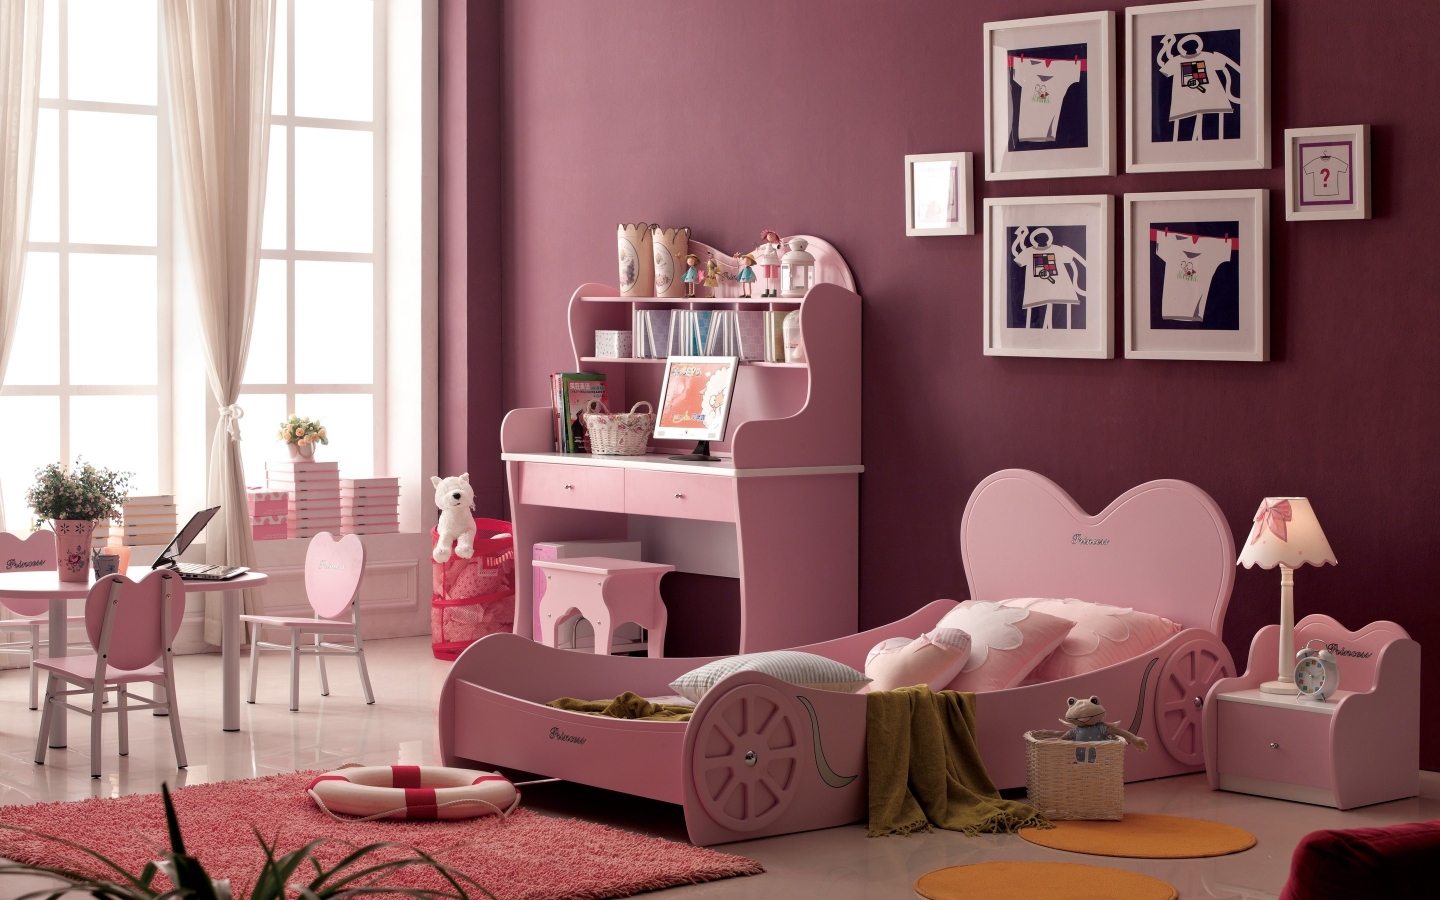 Princess Furniture for 1440 x 900 widescreen resolution